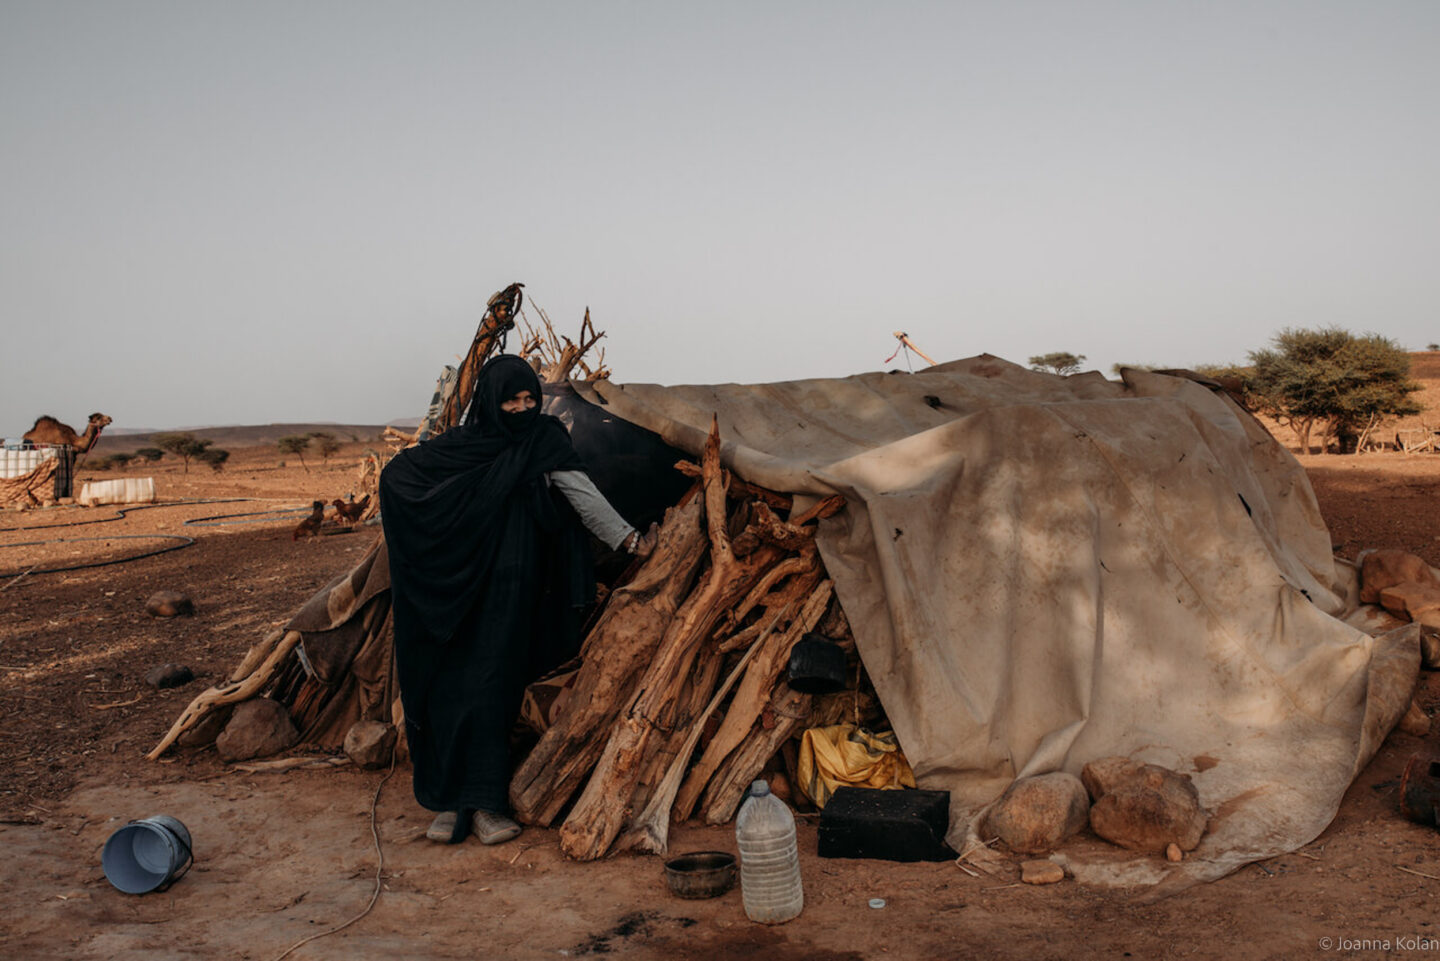 Nomadic woman in the Sahara Desert, Morocco